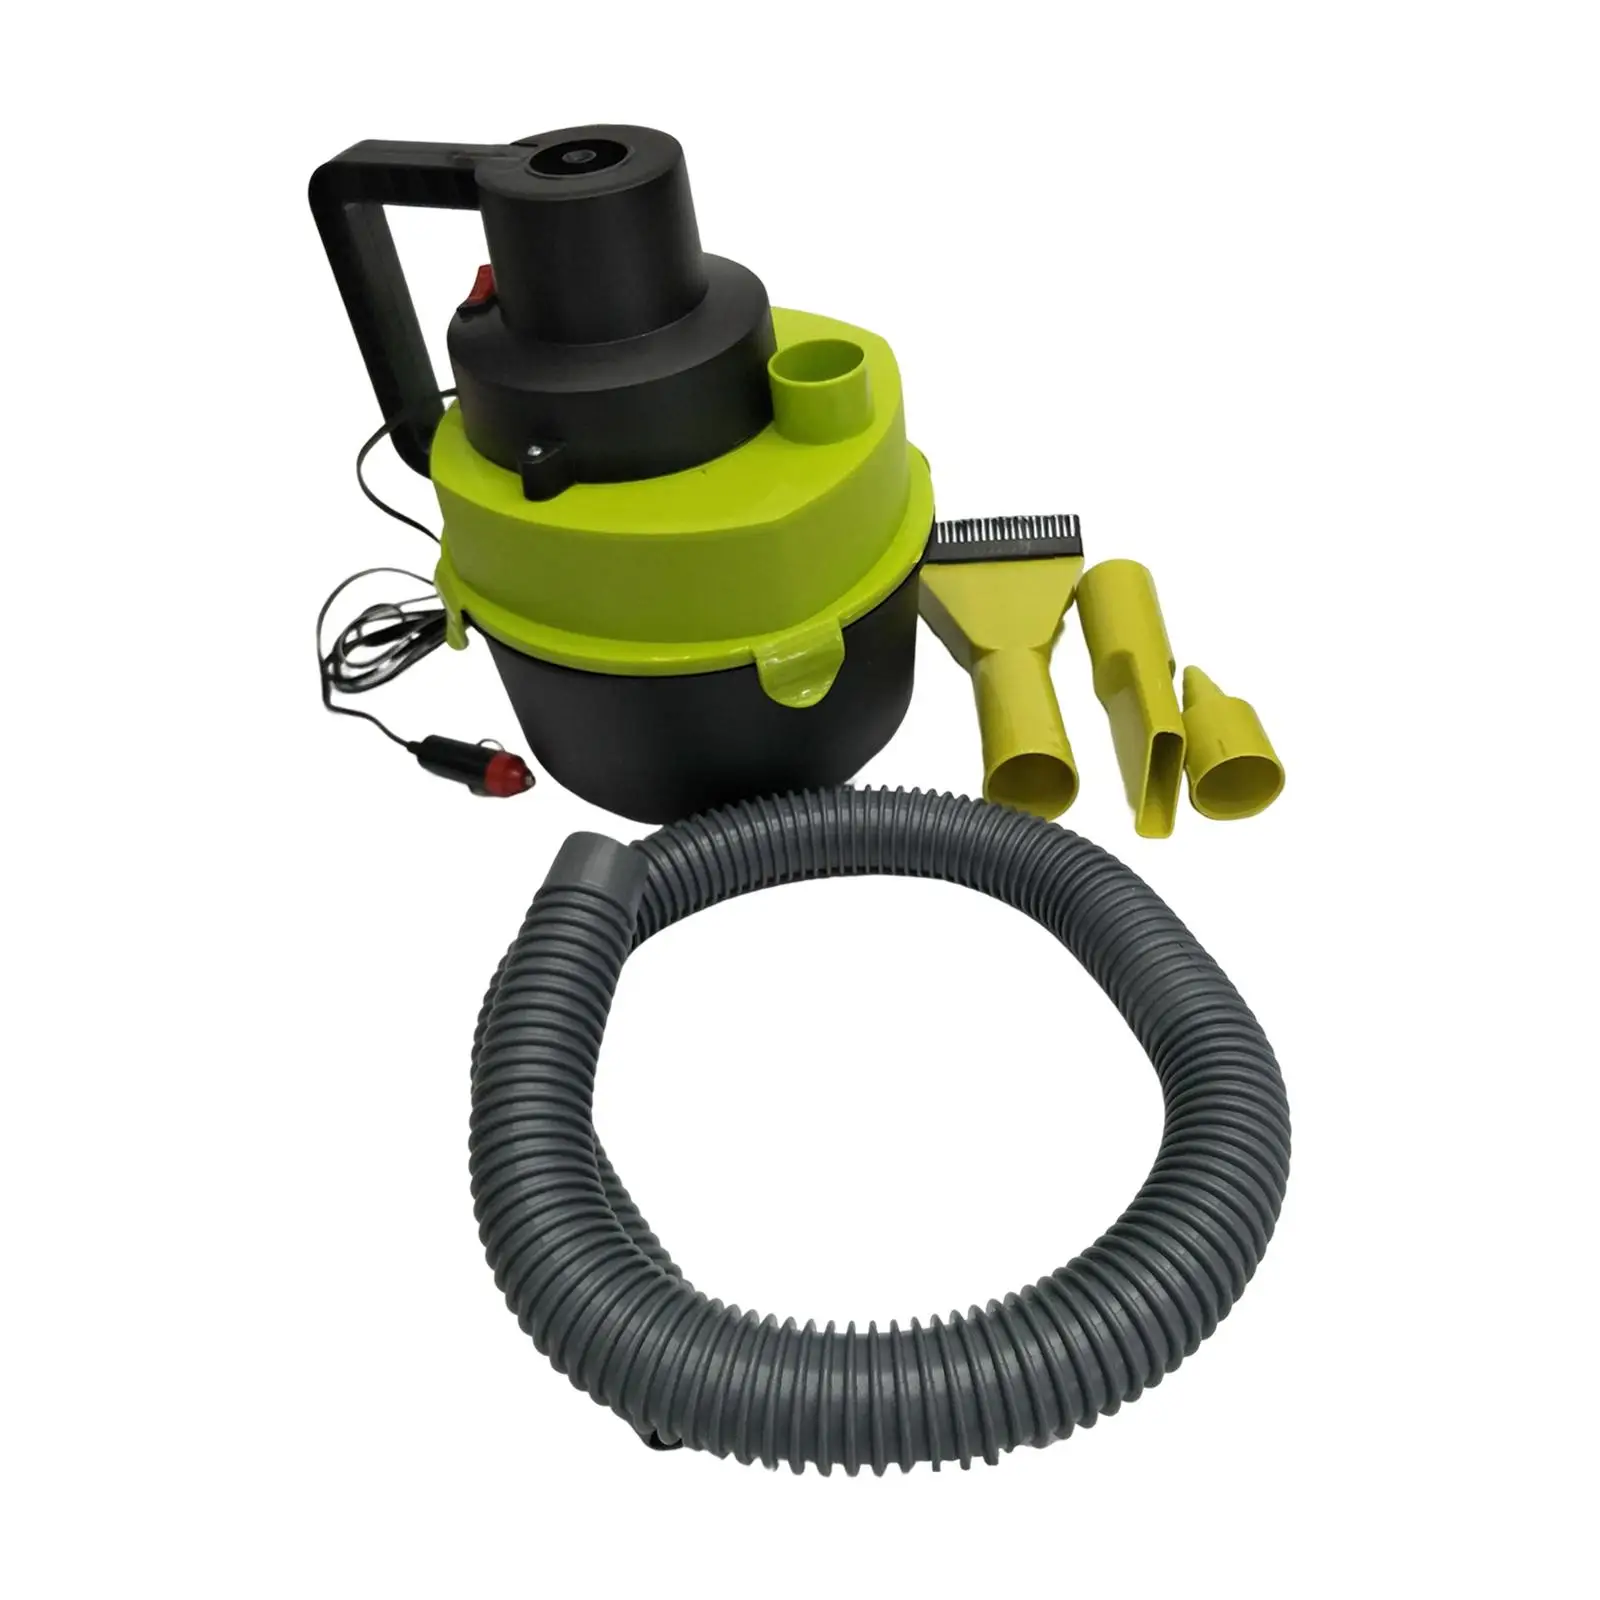 dry wet Vacuum Blowing Function Handheld Multifunctional Car Vacuum Shop Vacuum Cleaner for Cars Garage Home Workshop Basement